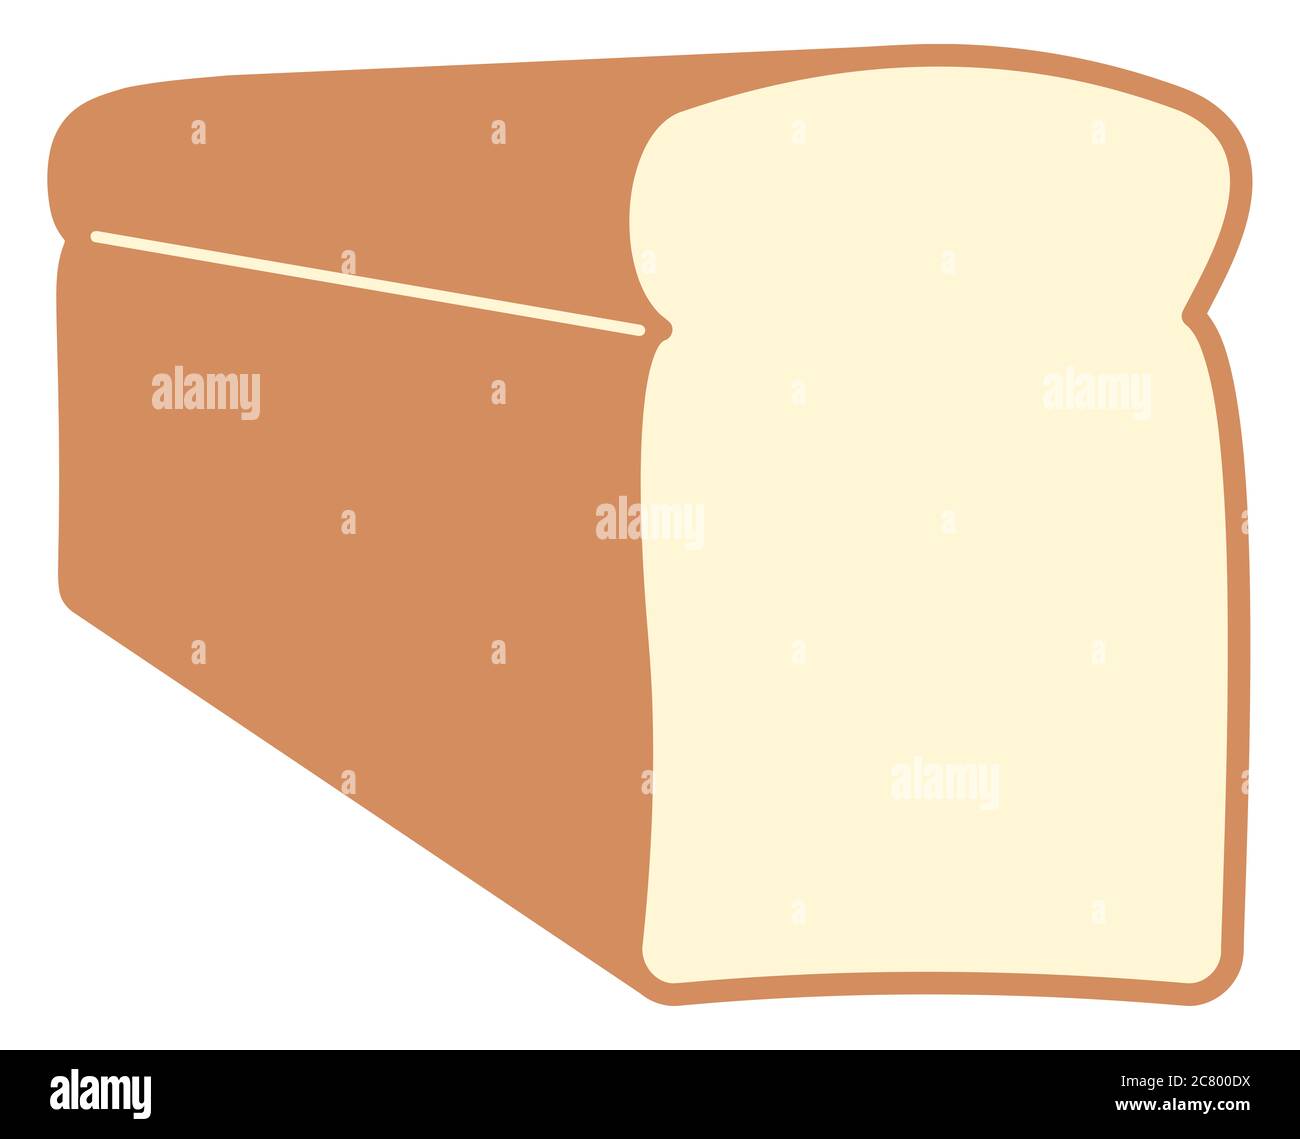 Brot Toast Brot Brot weißes Frühstück Illustration Stockfoto